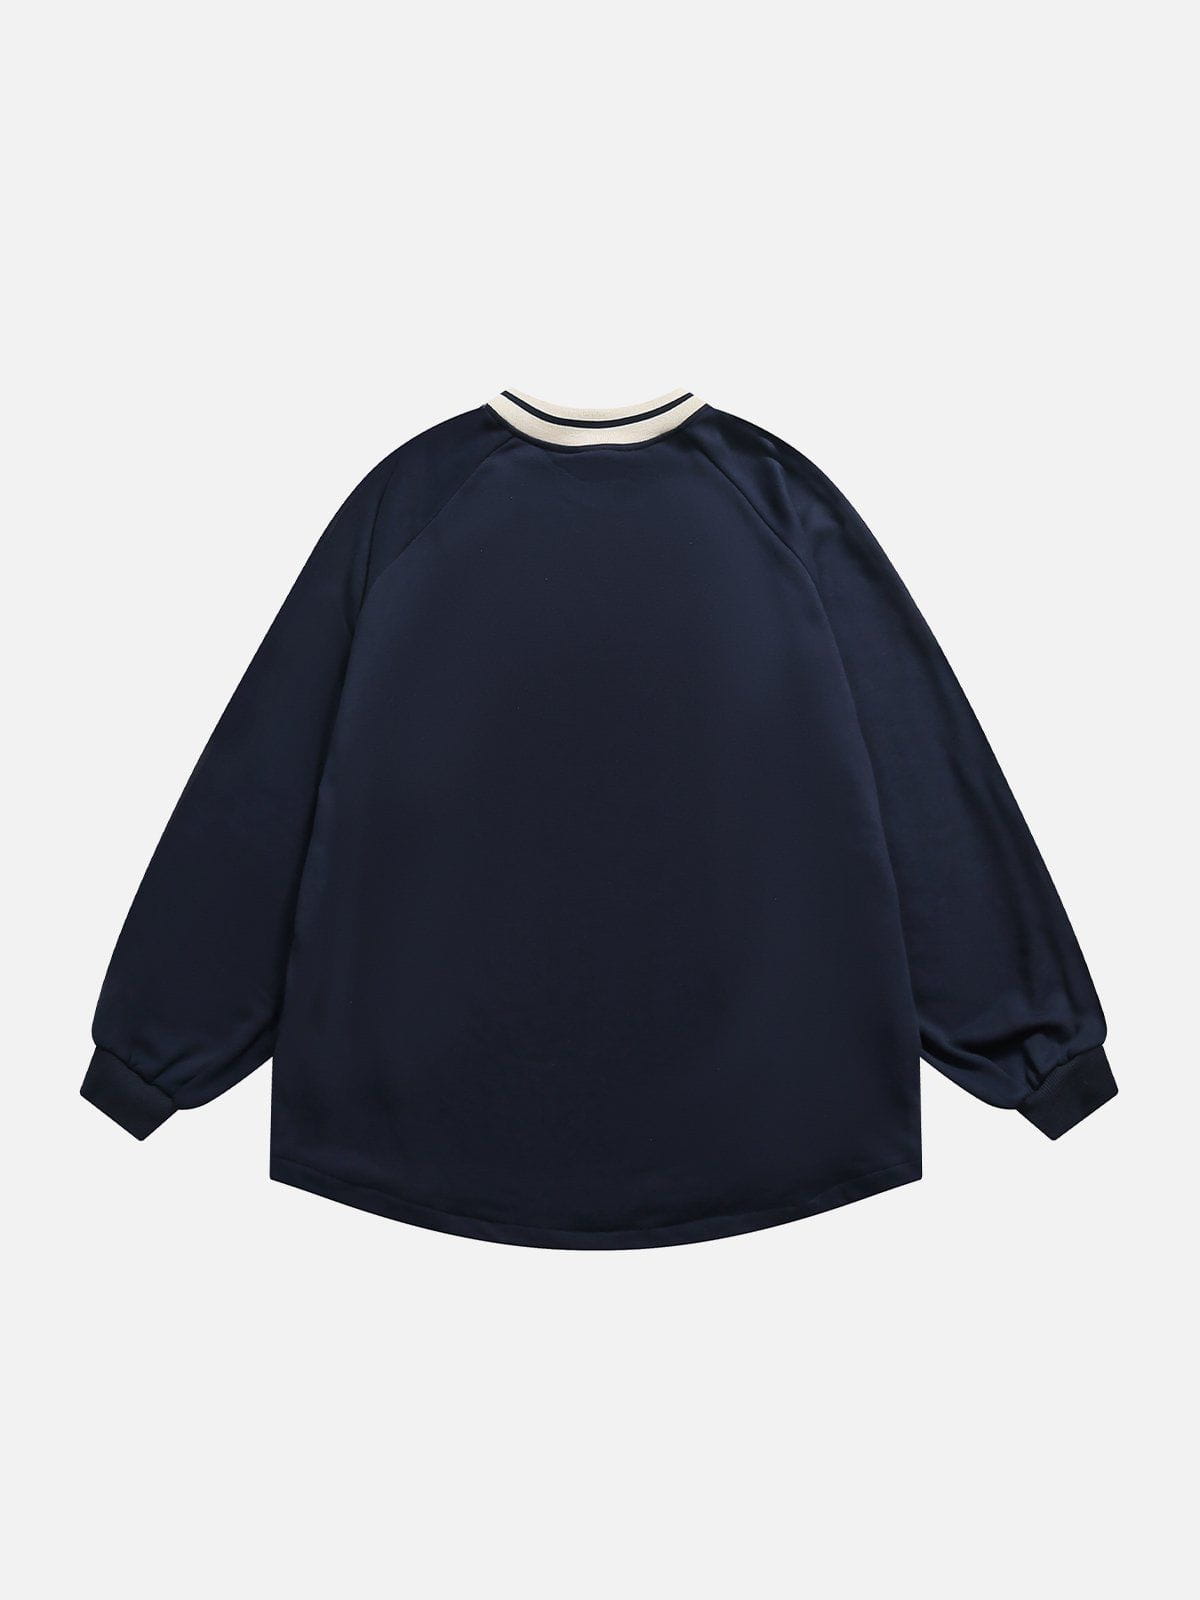 LUXENFY™ - Vintage Splicing Sweatshirt luxenfy.com